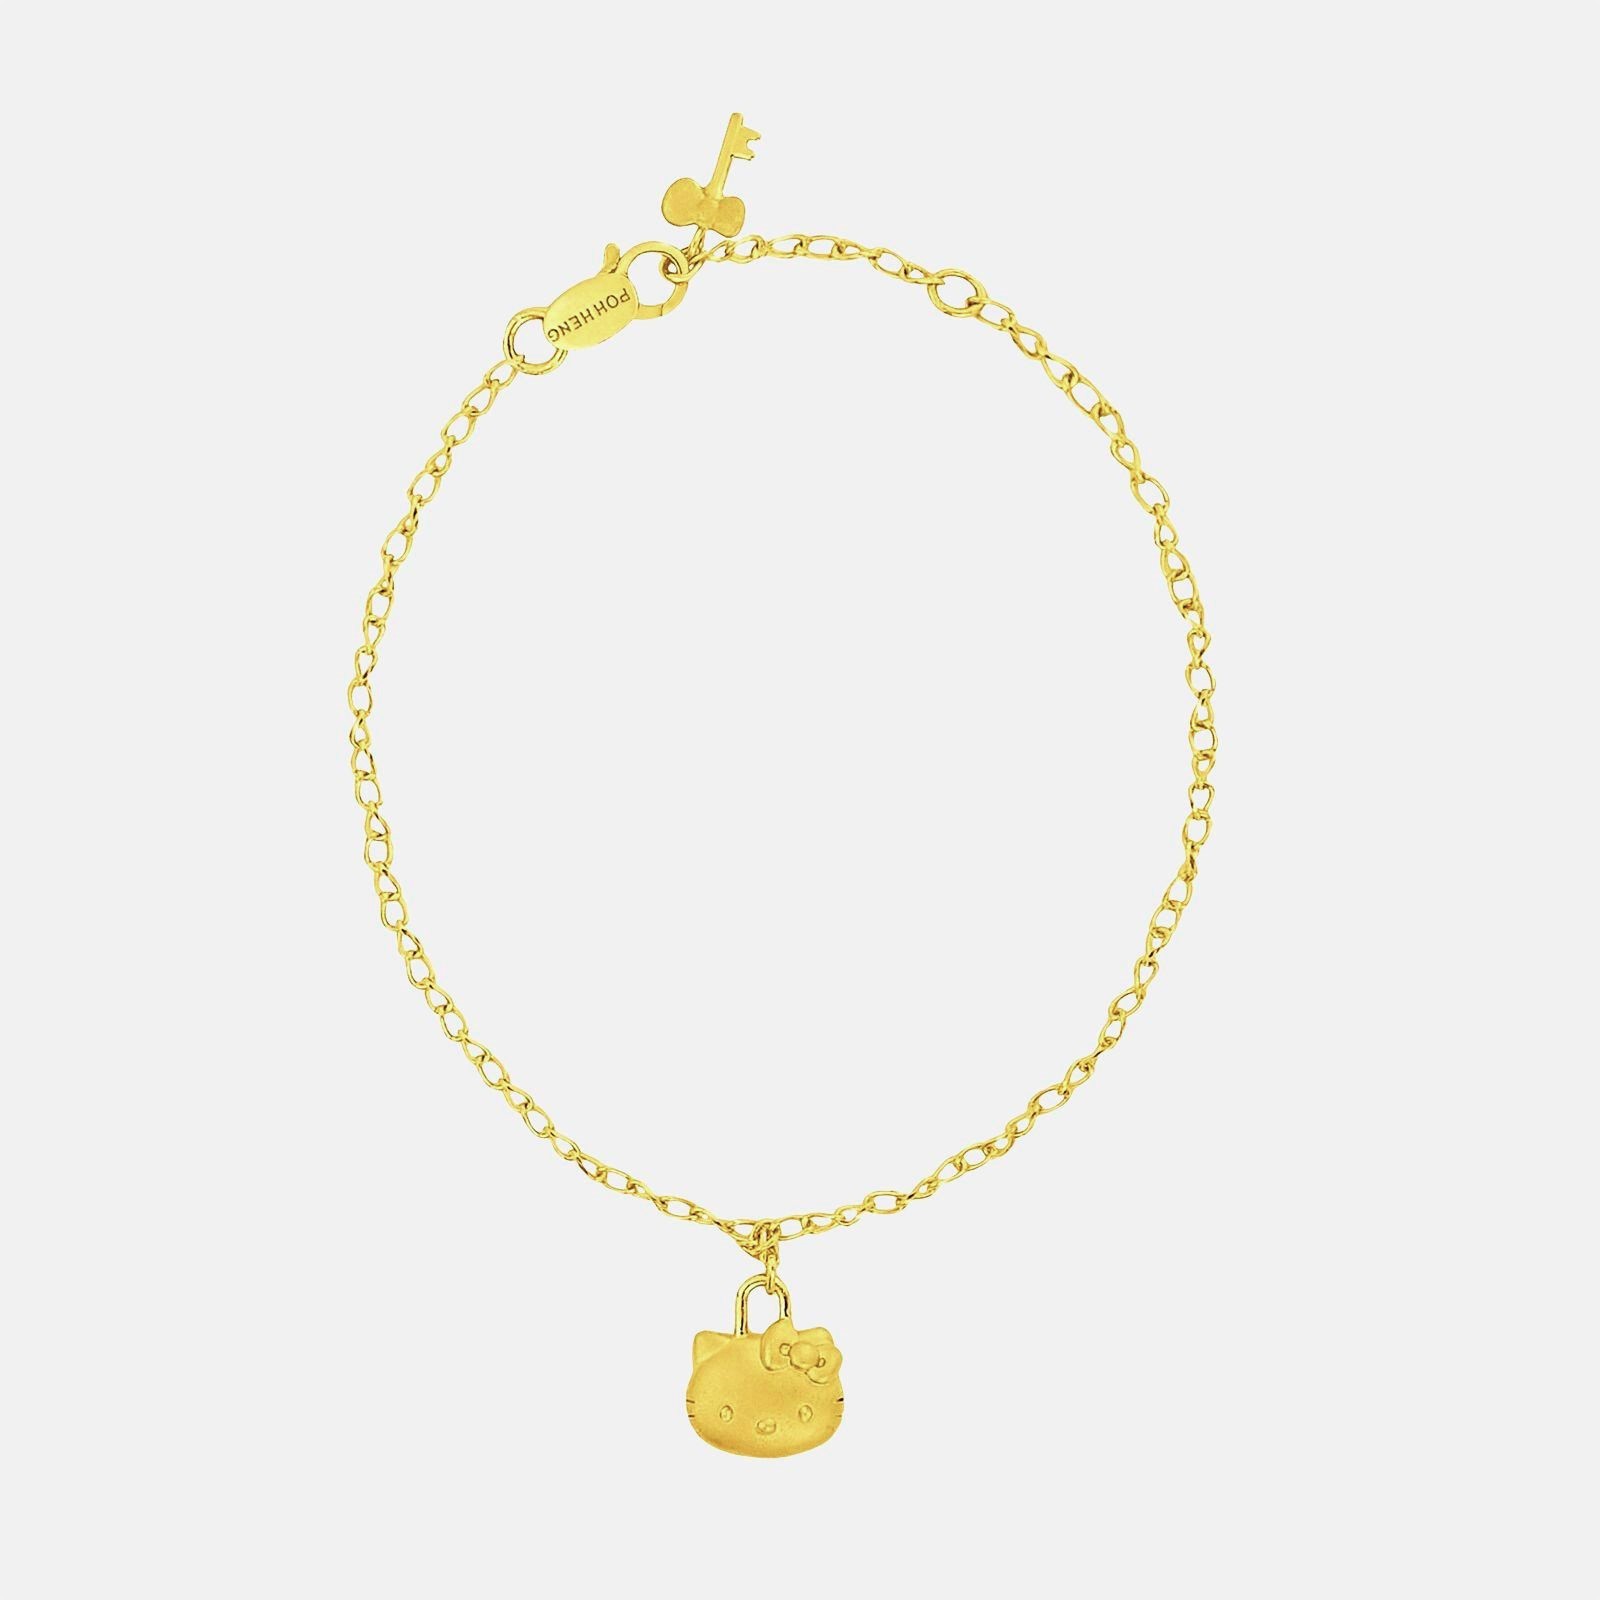 Poh Heng Hello Kitty Key Charm Bracelet in 22K Yellow Gold	